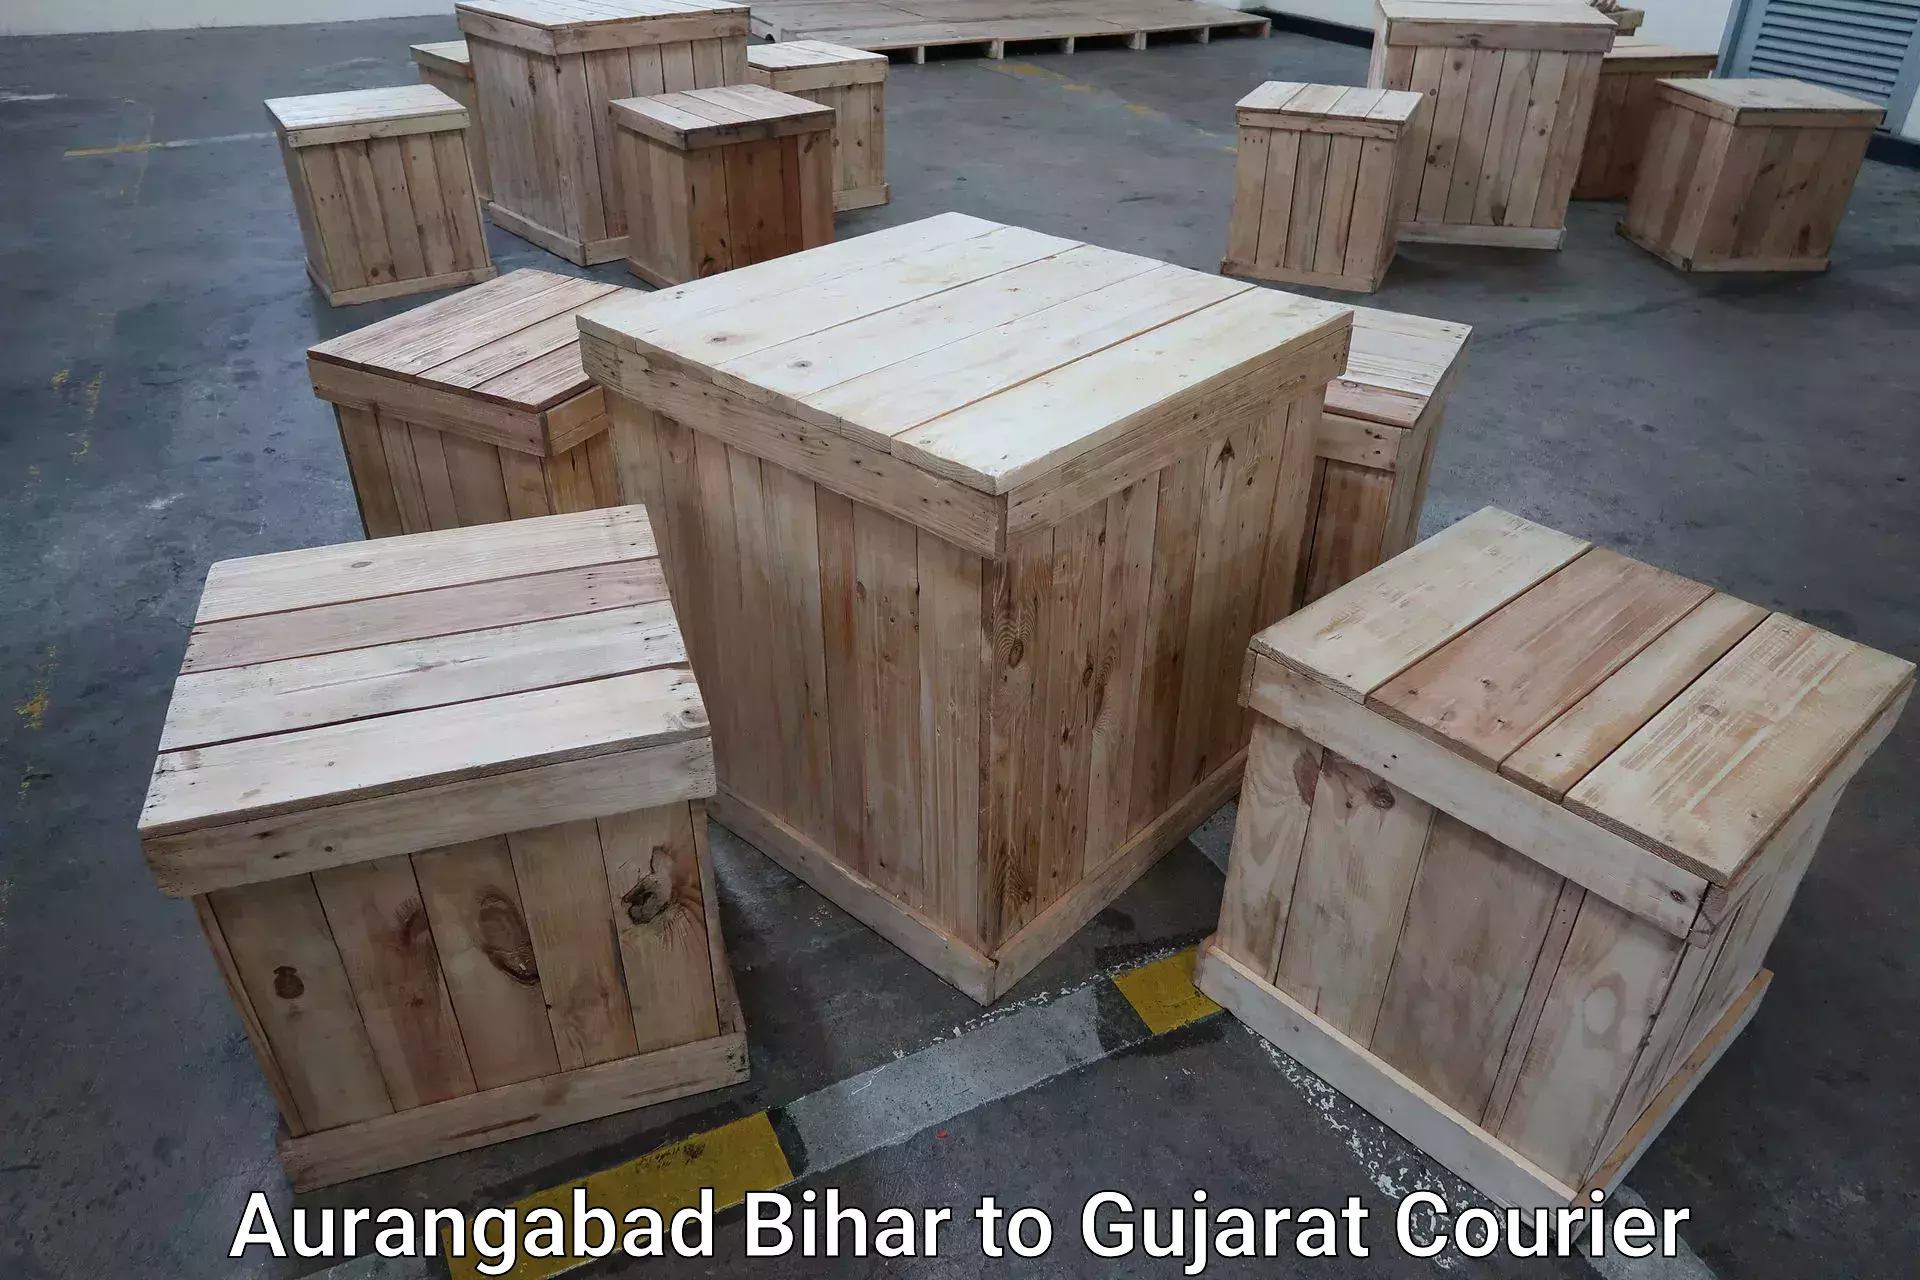 Baggage transport technology Aurangabad Bihar to Patan Gujarat